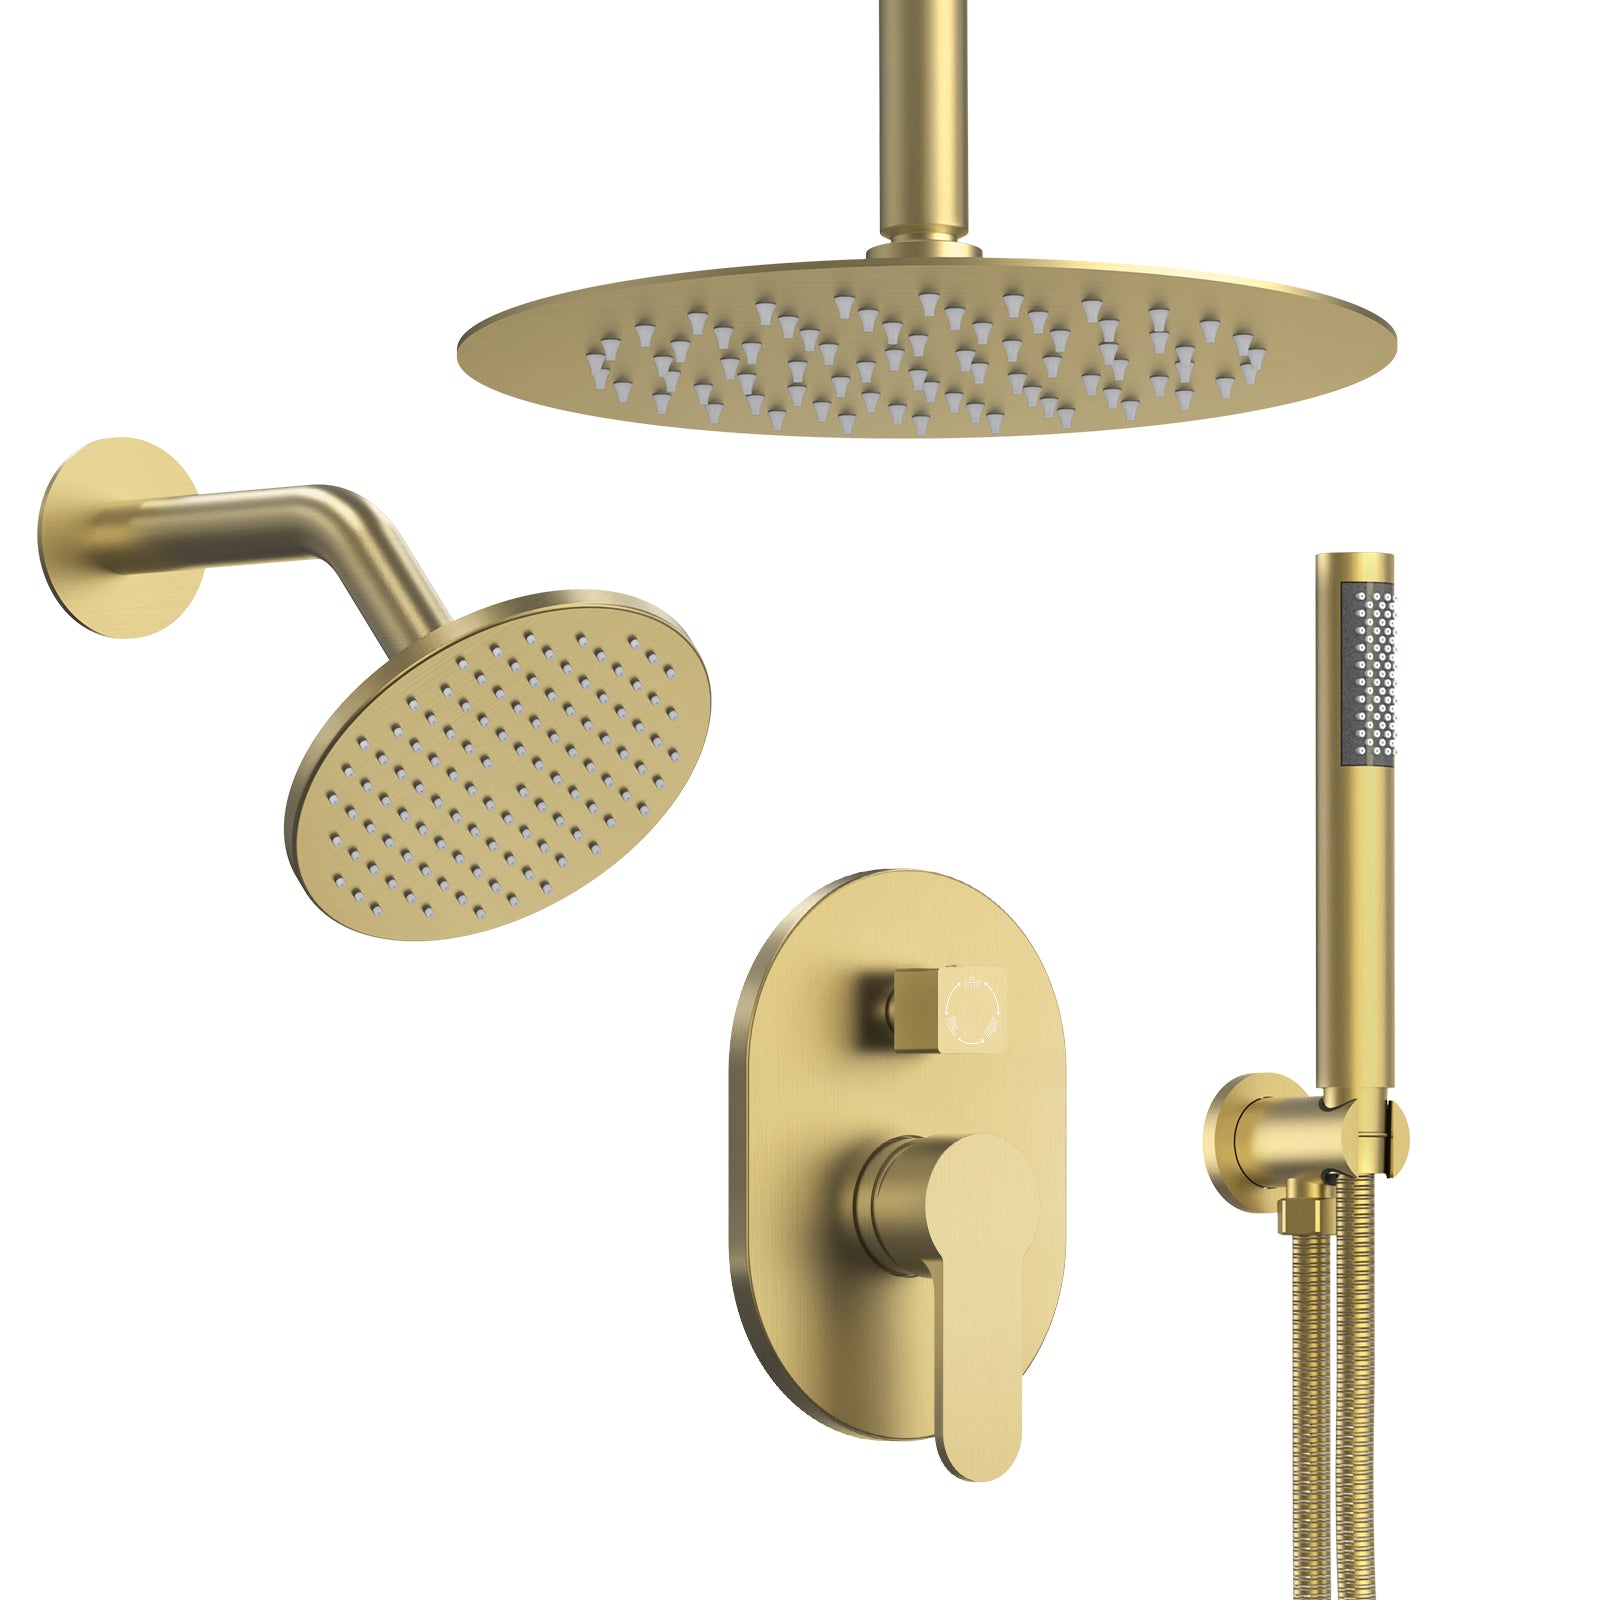 EVERSTEIN Dual Shower Heads System: Brushed Gold 10" Round Showerhead High-Pressure Luxury Rainfall Shower Fixtures